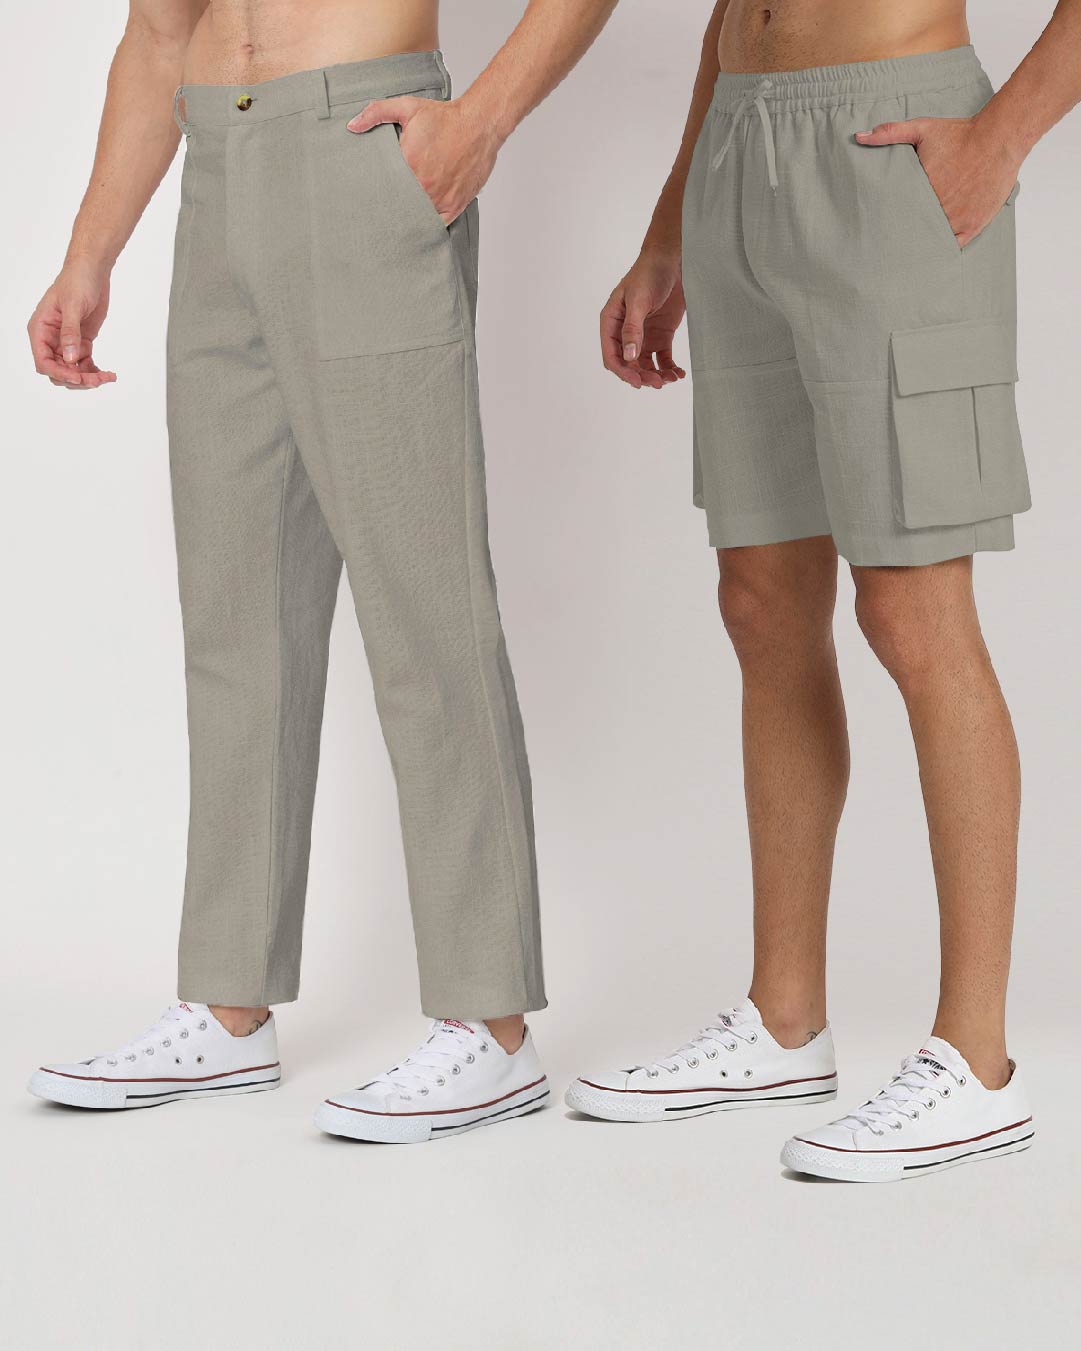 Combo : Comfy Ease & Cargo Grey Men's Pants & Shorts  - Set of 2